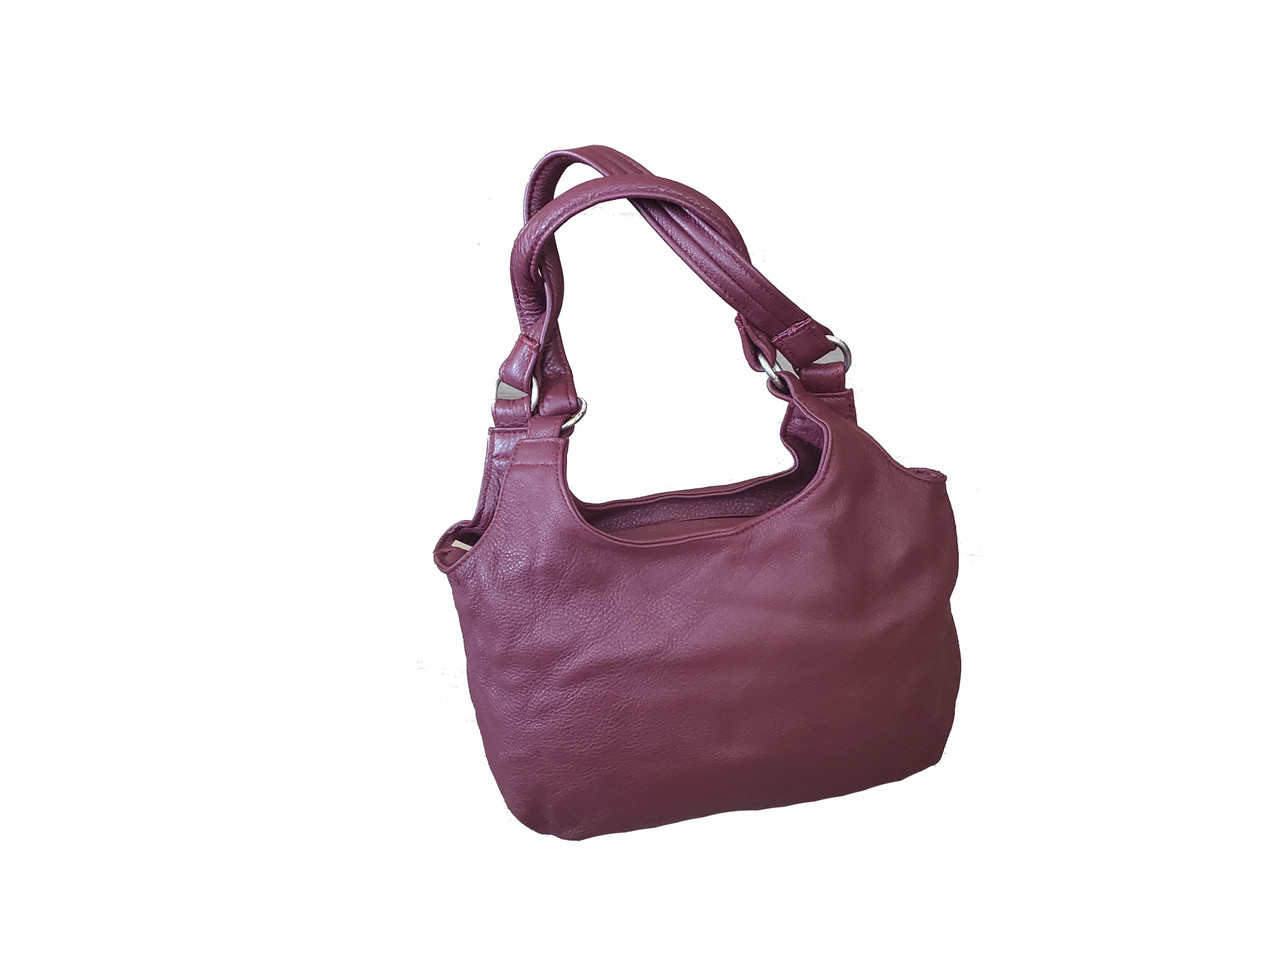 Burgundy leather handbag hi-res stock photography and images - Alamy